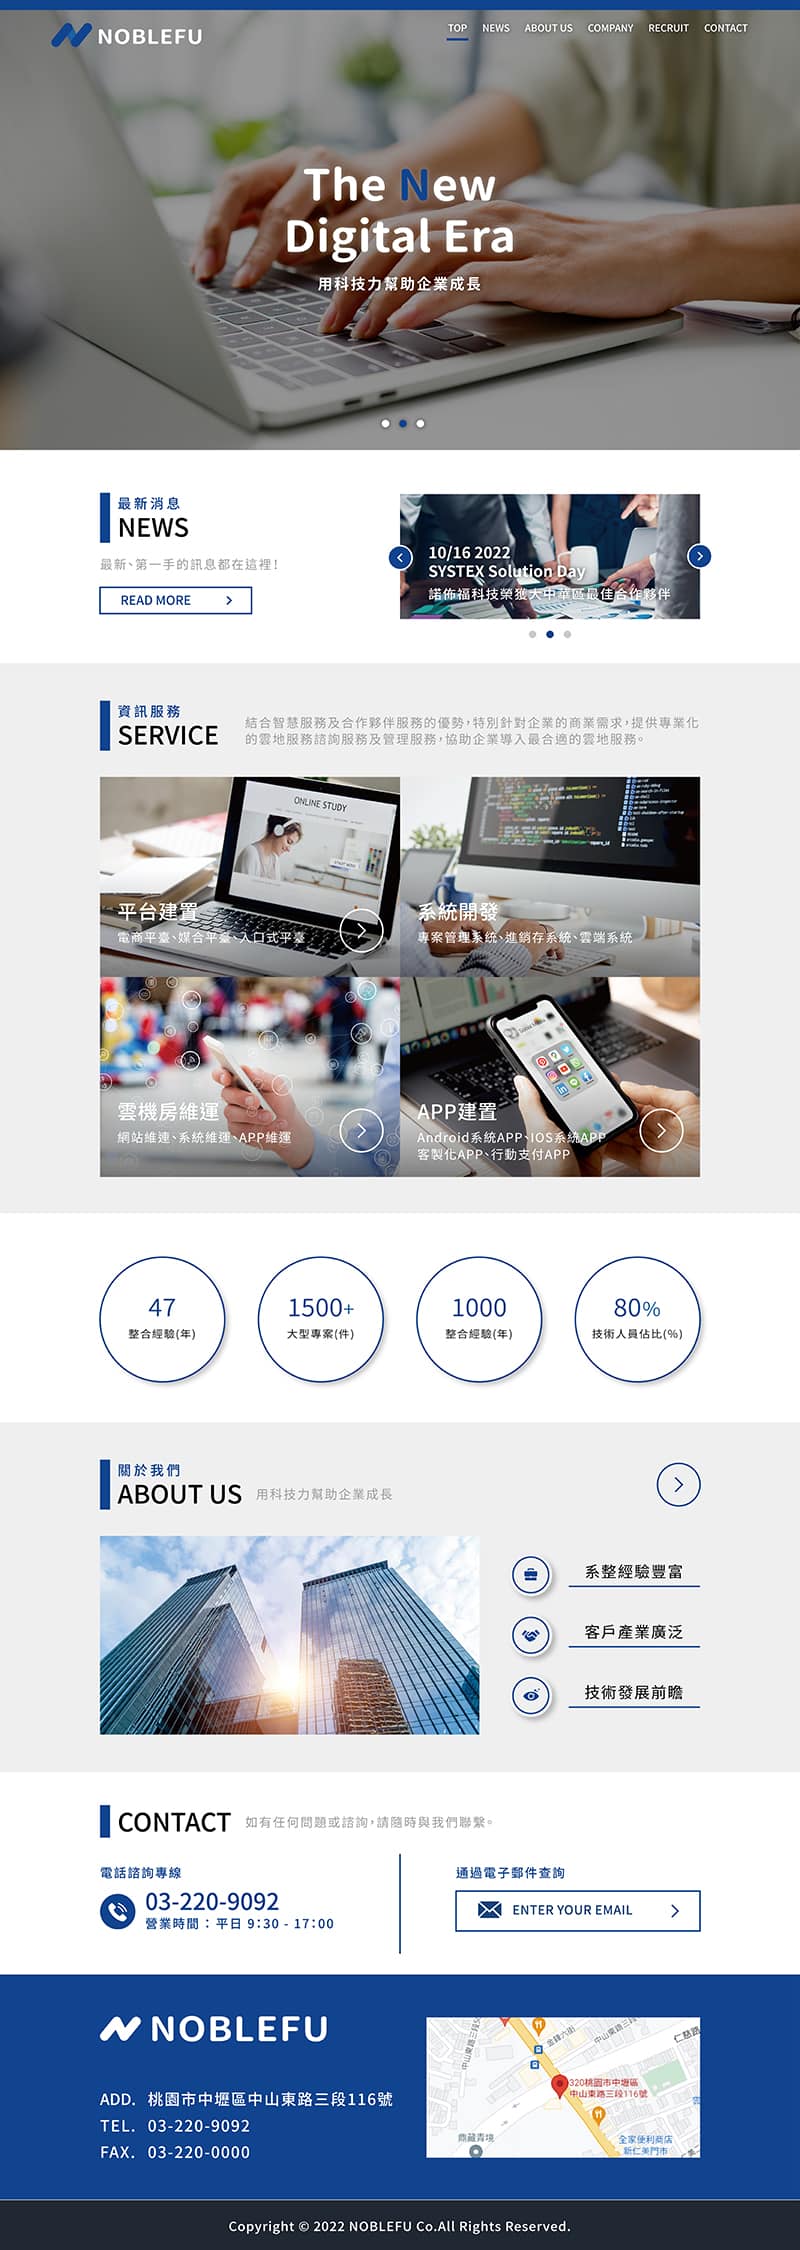 NOBLEFU 諾佈福資訊科技公司的網站首頁。